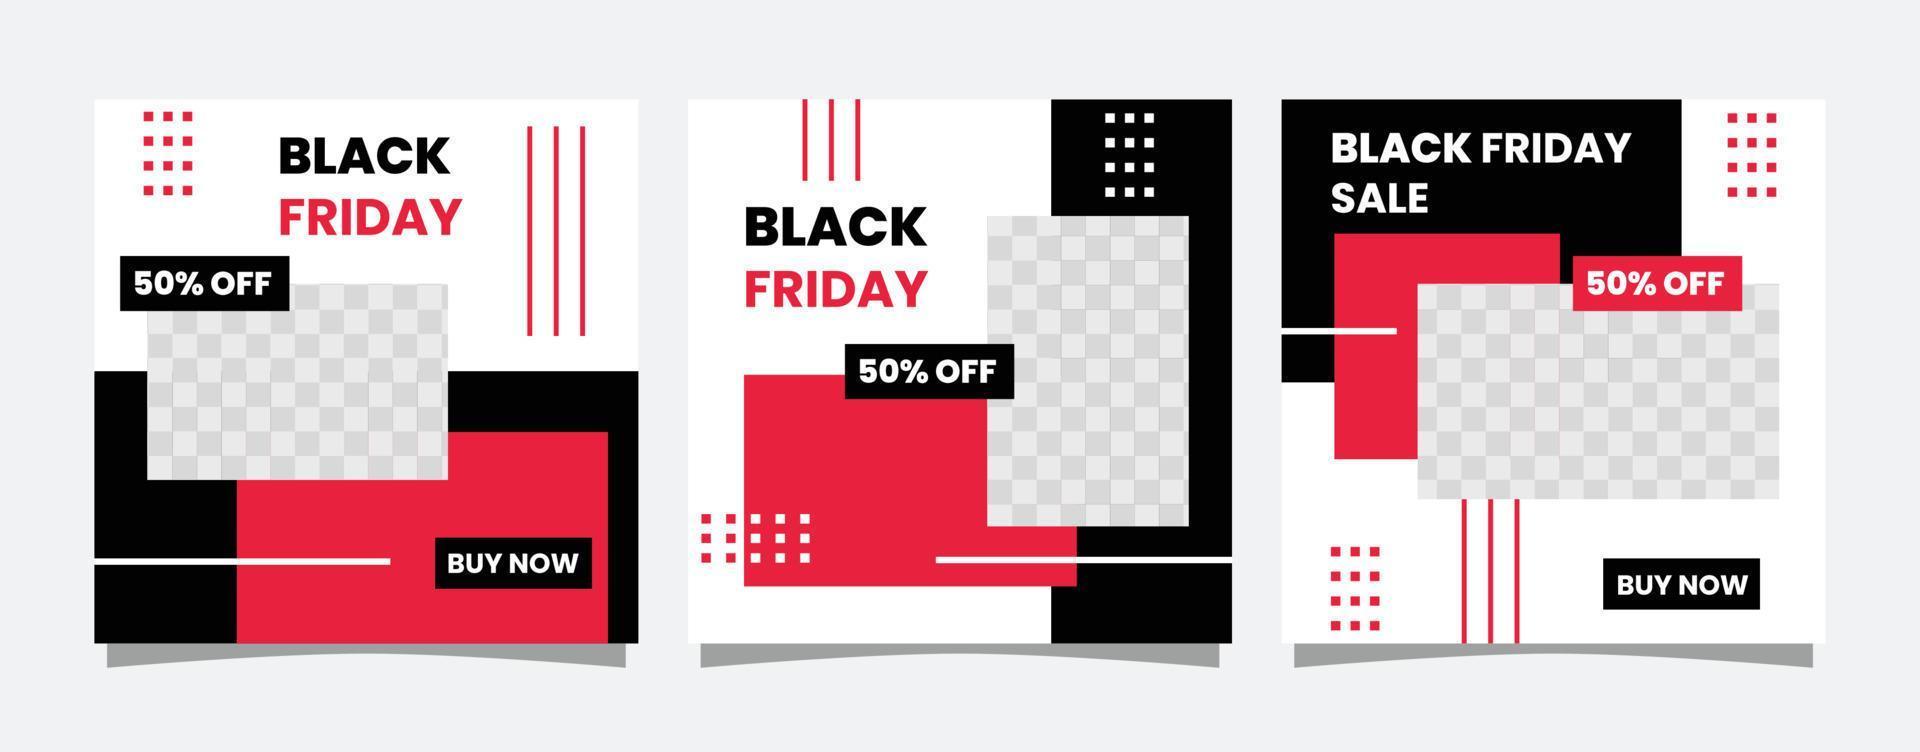 Black Friday Sale Post template Banner Design vector